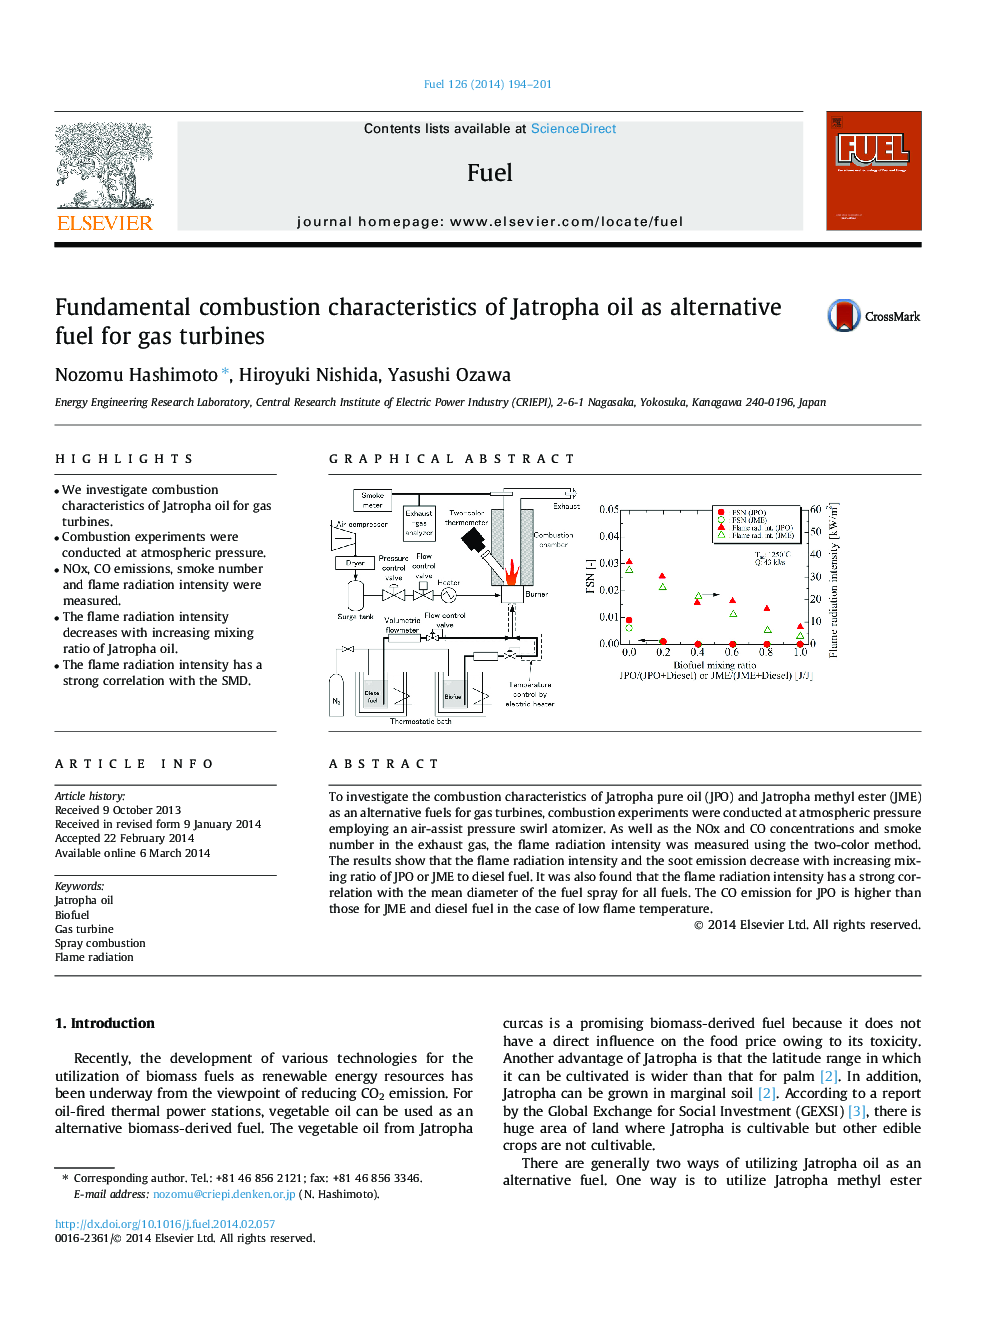 Fundamental combustion characteristics of Jatropha oil as alternative fuel for gas turbines